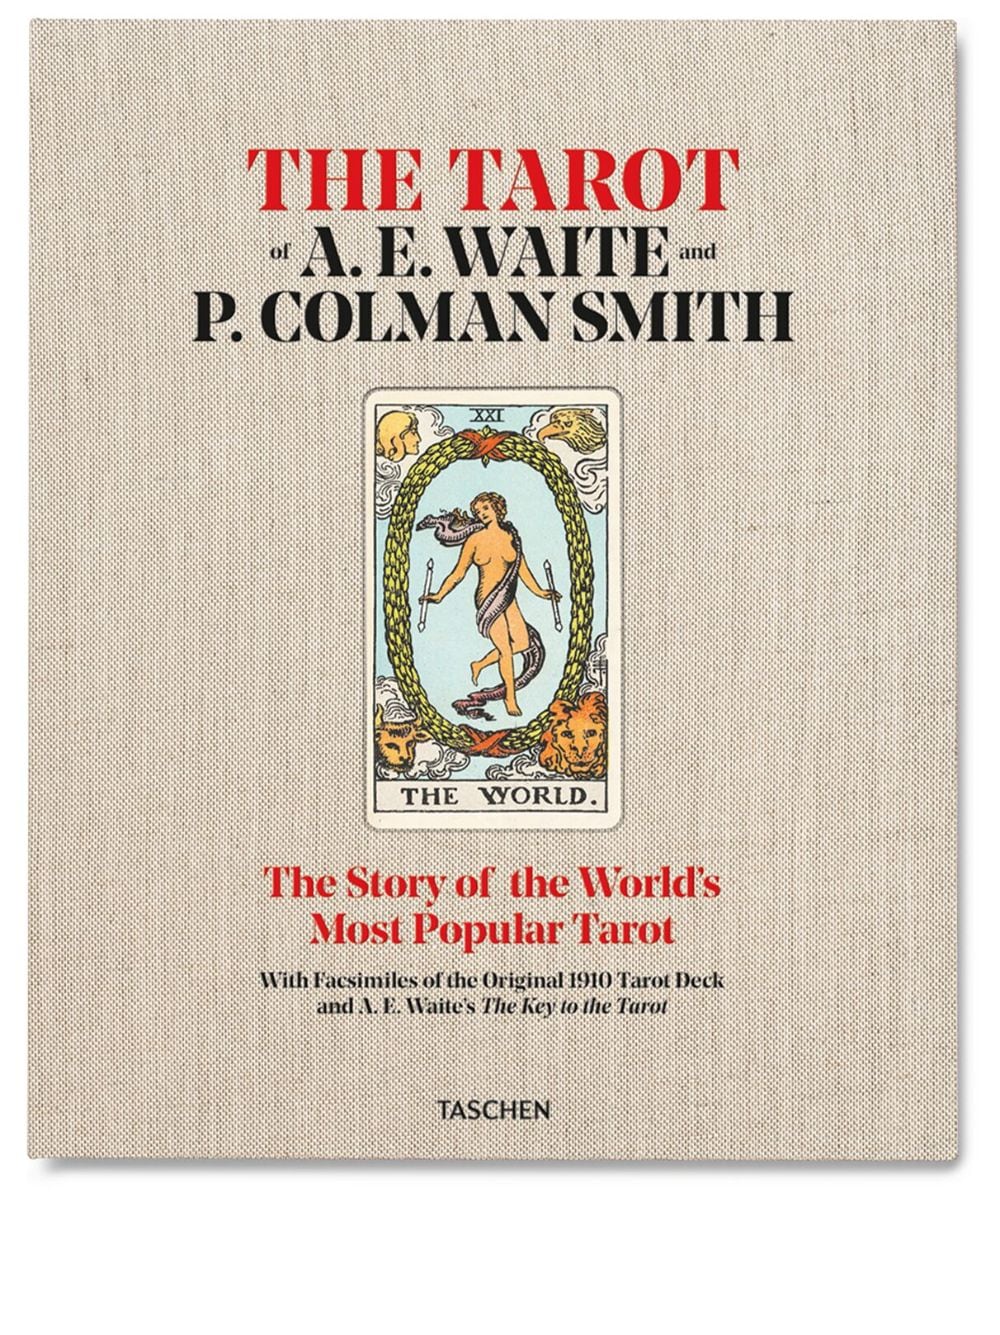 Taschen The Tarot Of A. E. Waite And P. Colman Smith In Neutrals